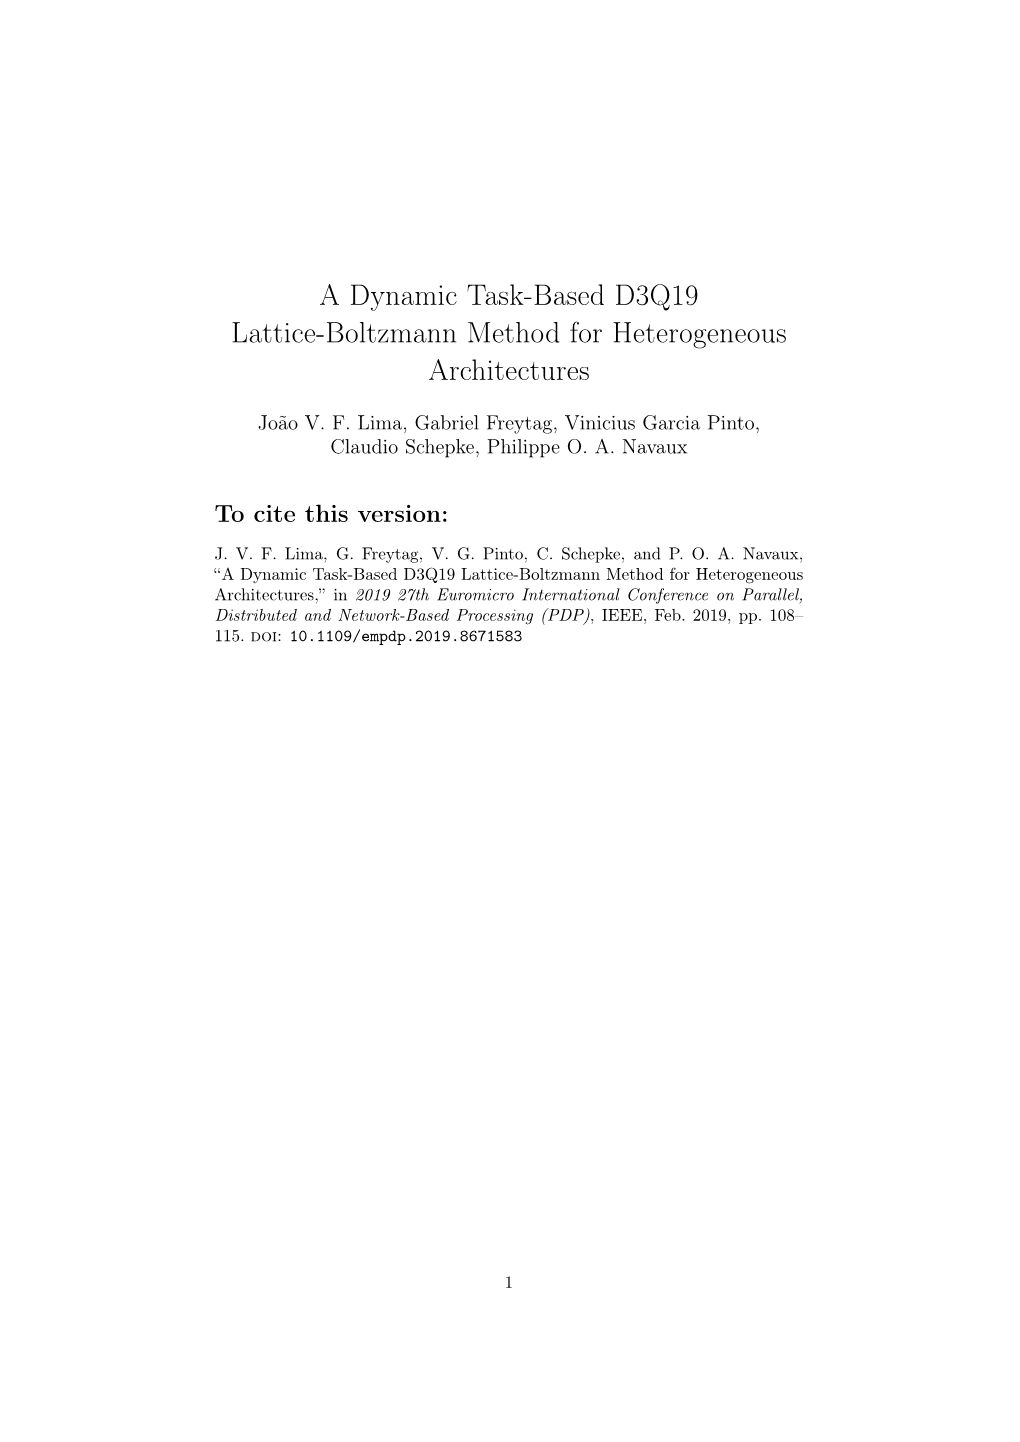 A Dynamic Task-Based D3Q19 Lattice-Boltzmann Method for Heterogeneous Architectures